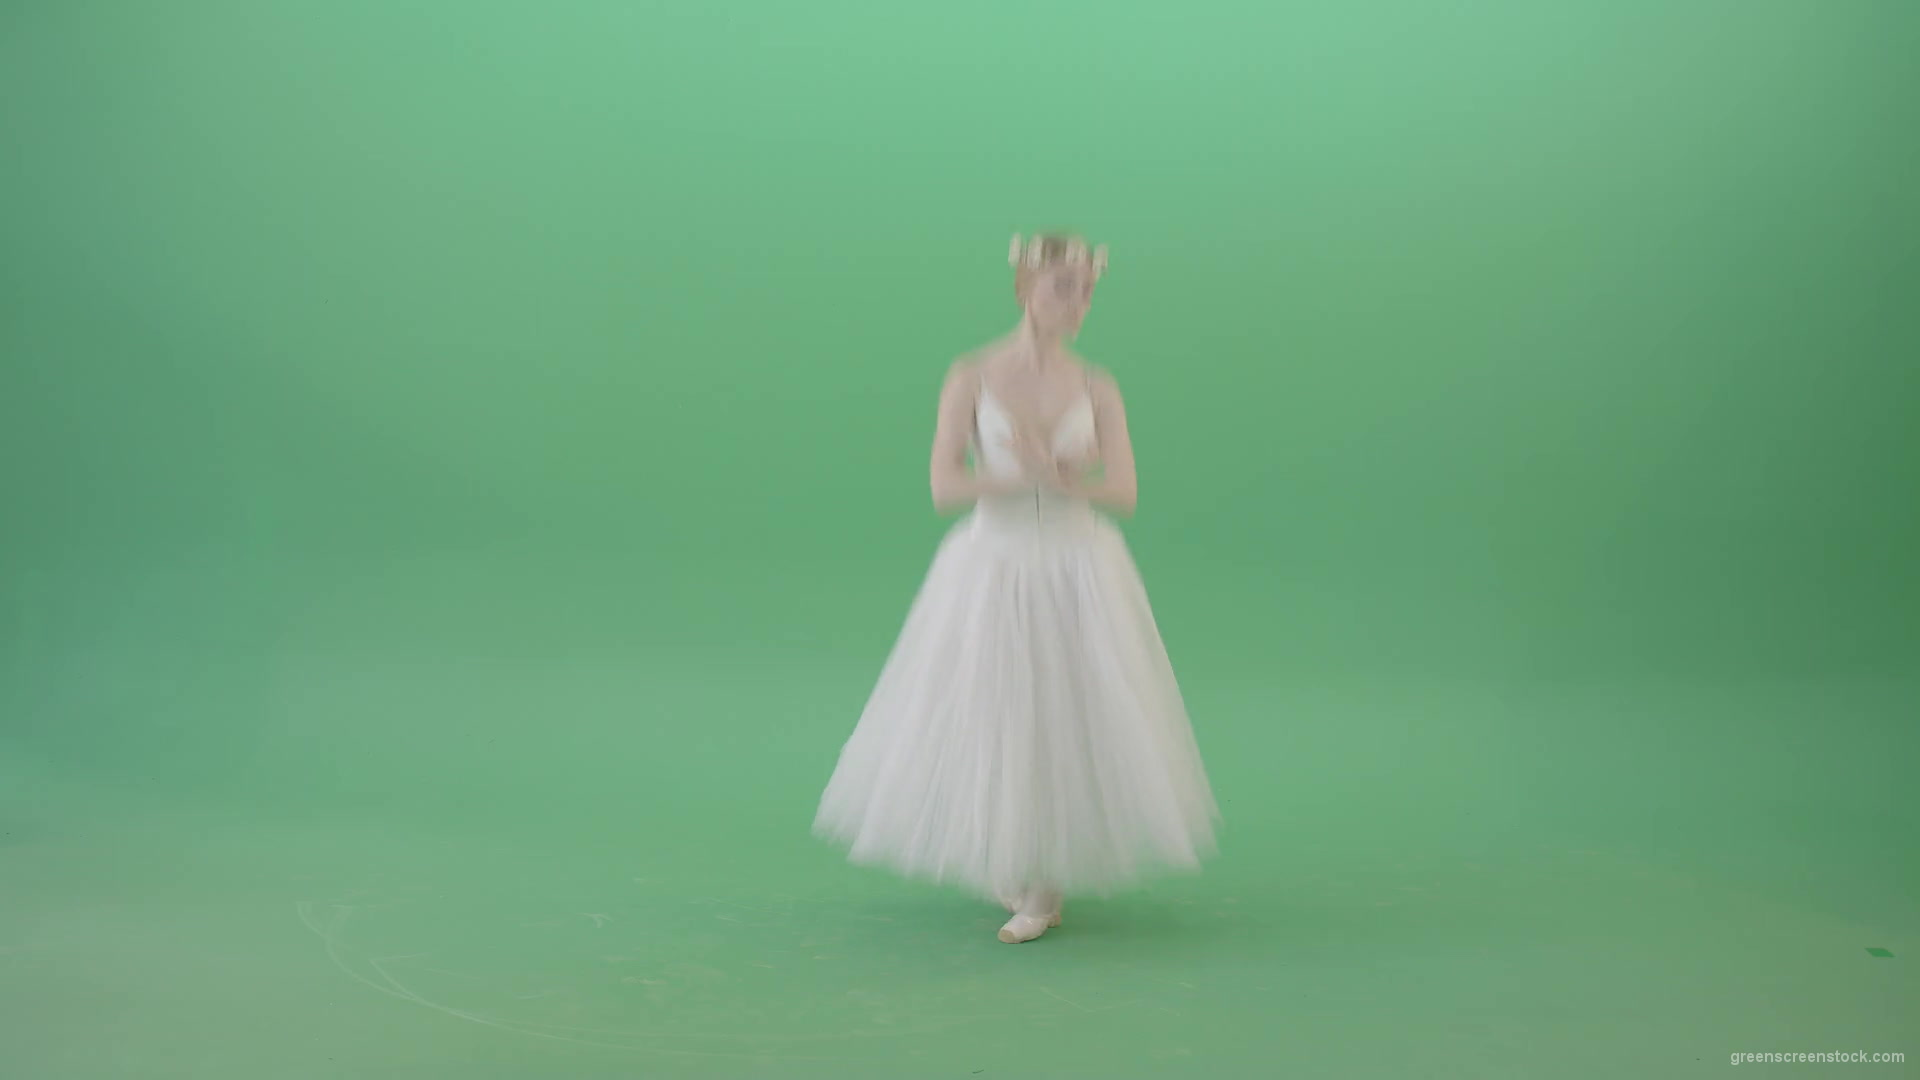 Beautiful-jumping-ballet-dancing-girl-choreograph-jumps-on-green-screen-4K-Video-Footage-1920_002 Green Screen Stock